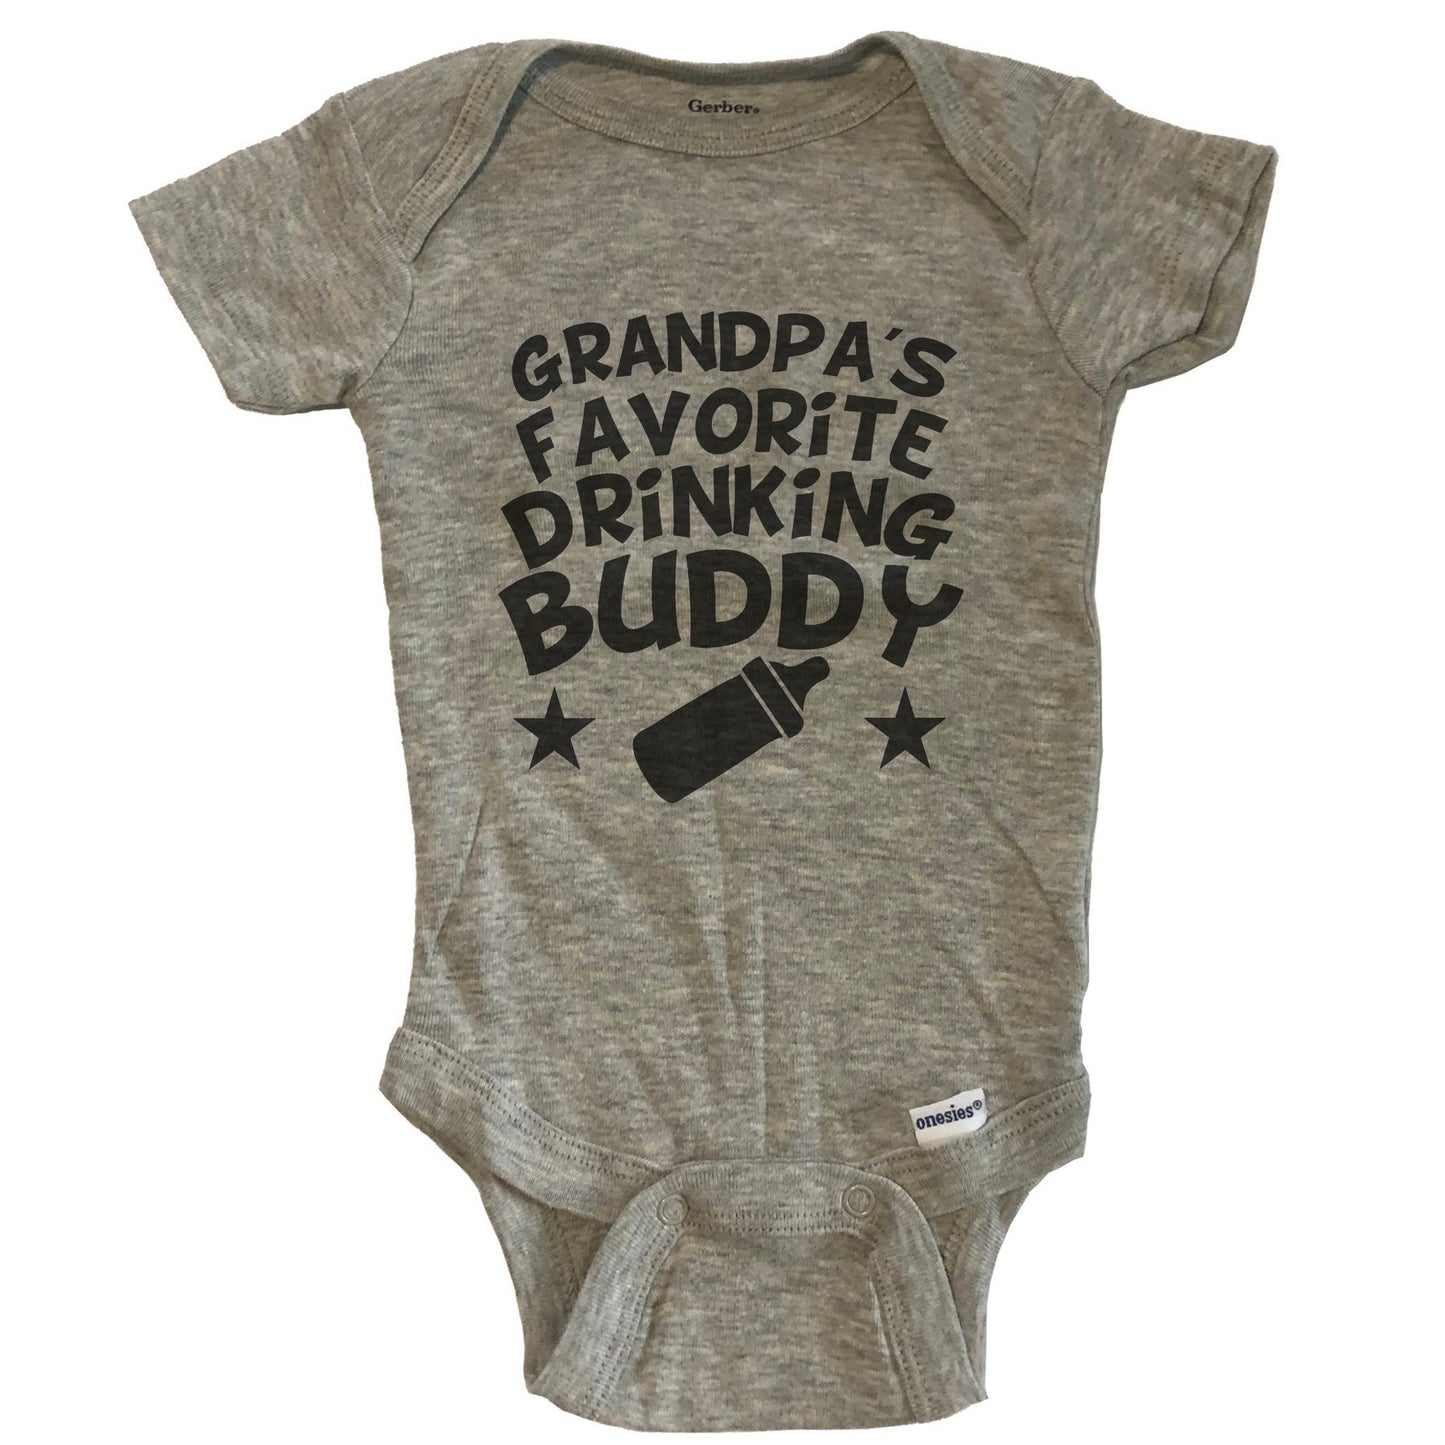 Grandpa's Favorite Drinking Buddy Onesie - Funny Baby Bodysuit for Grandchild 0-3 Months / Grey